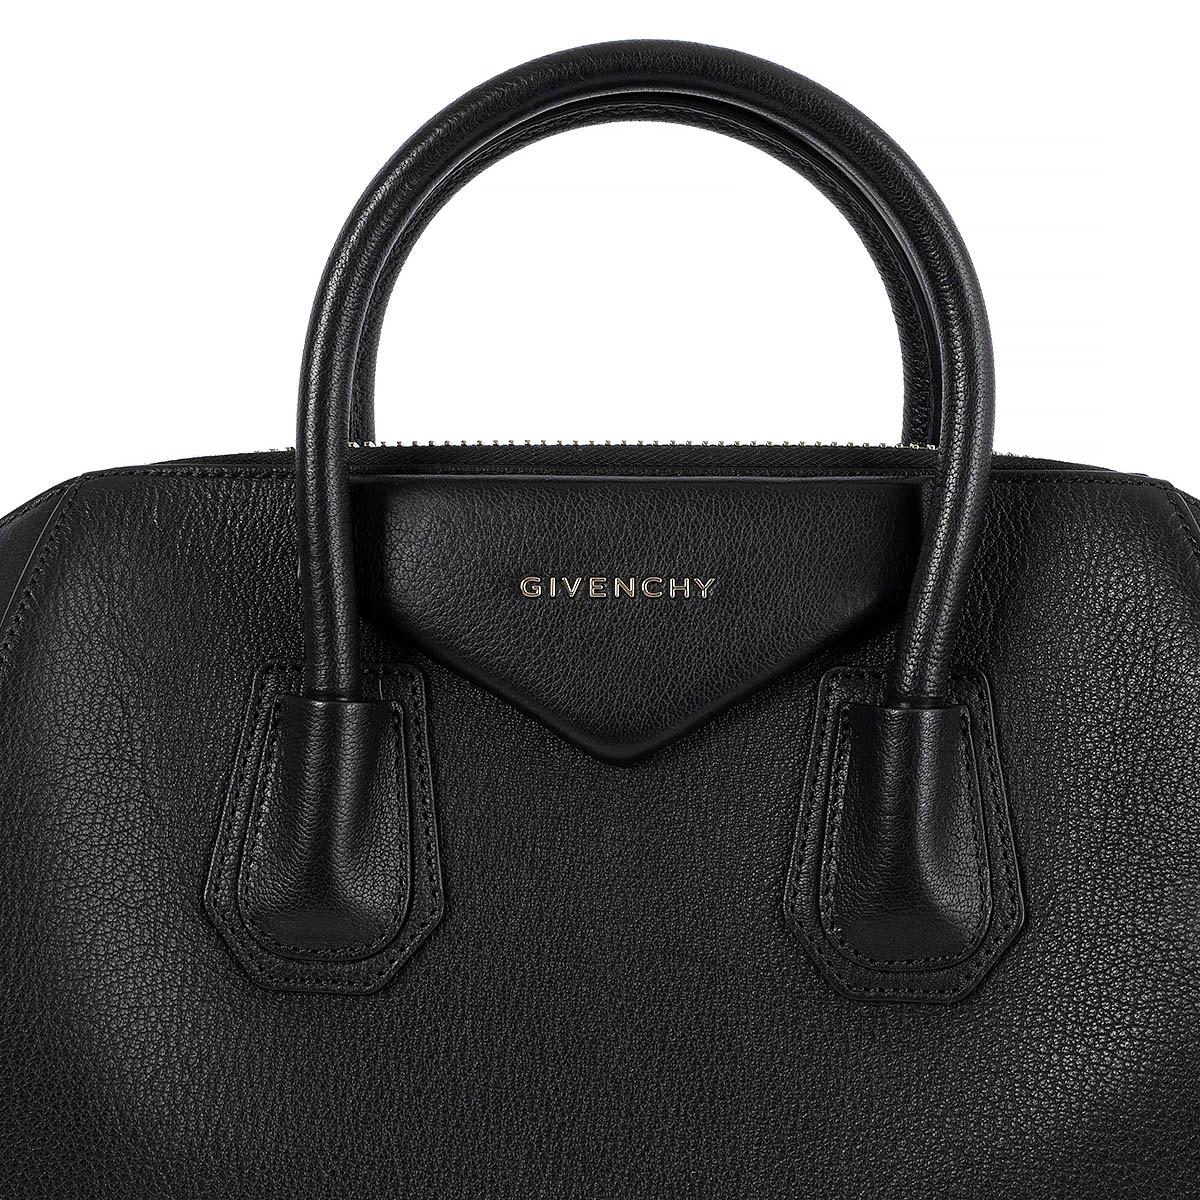 GIVENCHY black leather ANTIGONA MEDIUM Tote Bag For Sale 2